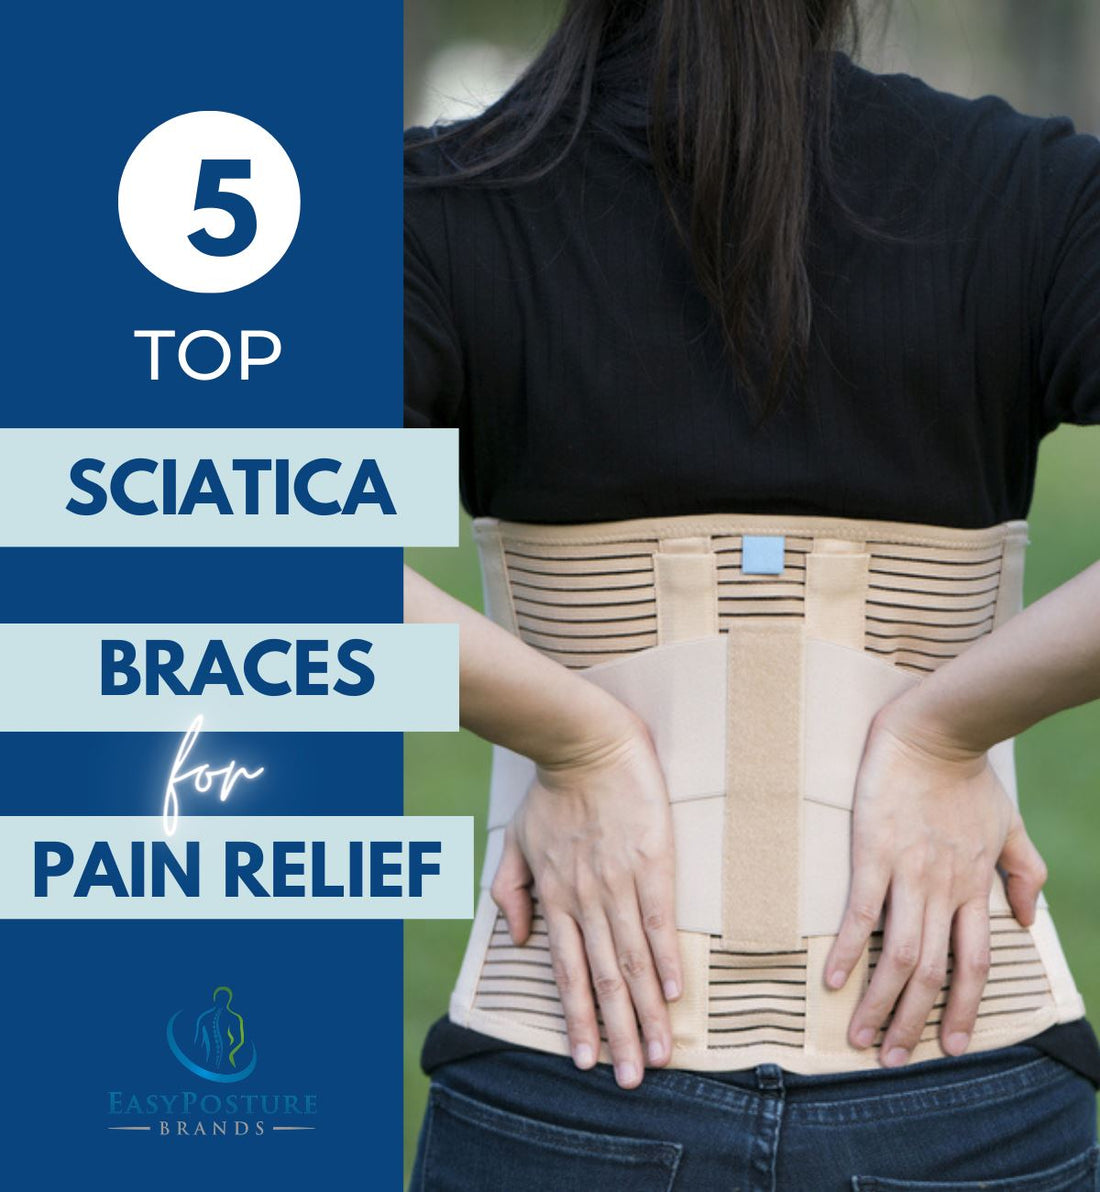 5 Top Sciatica Braces for Pain Relief